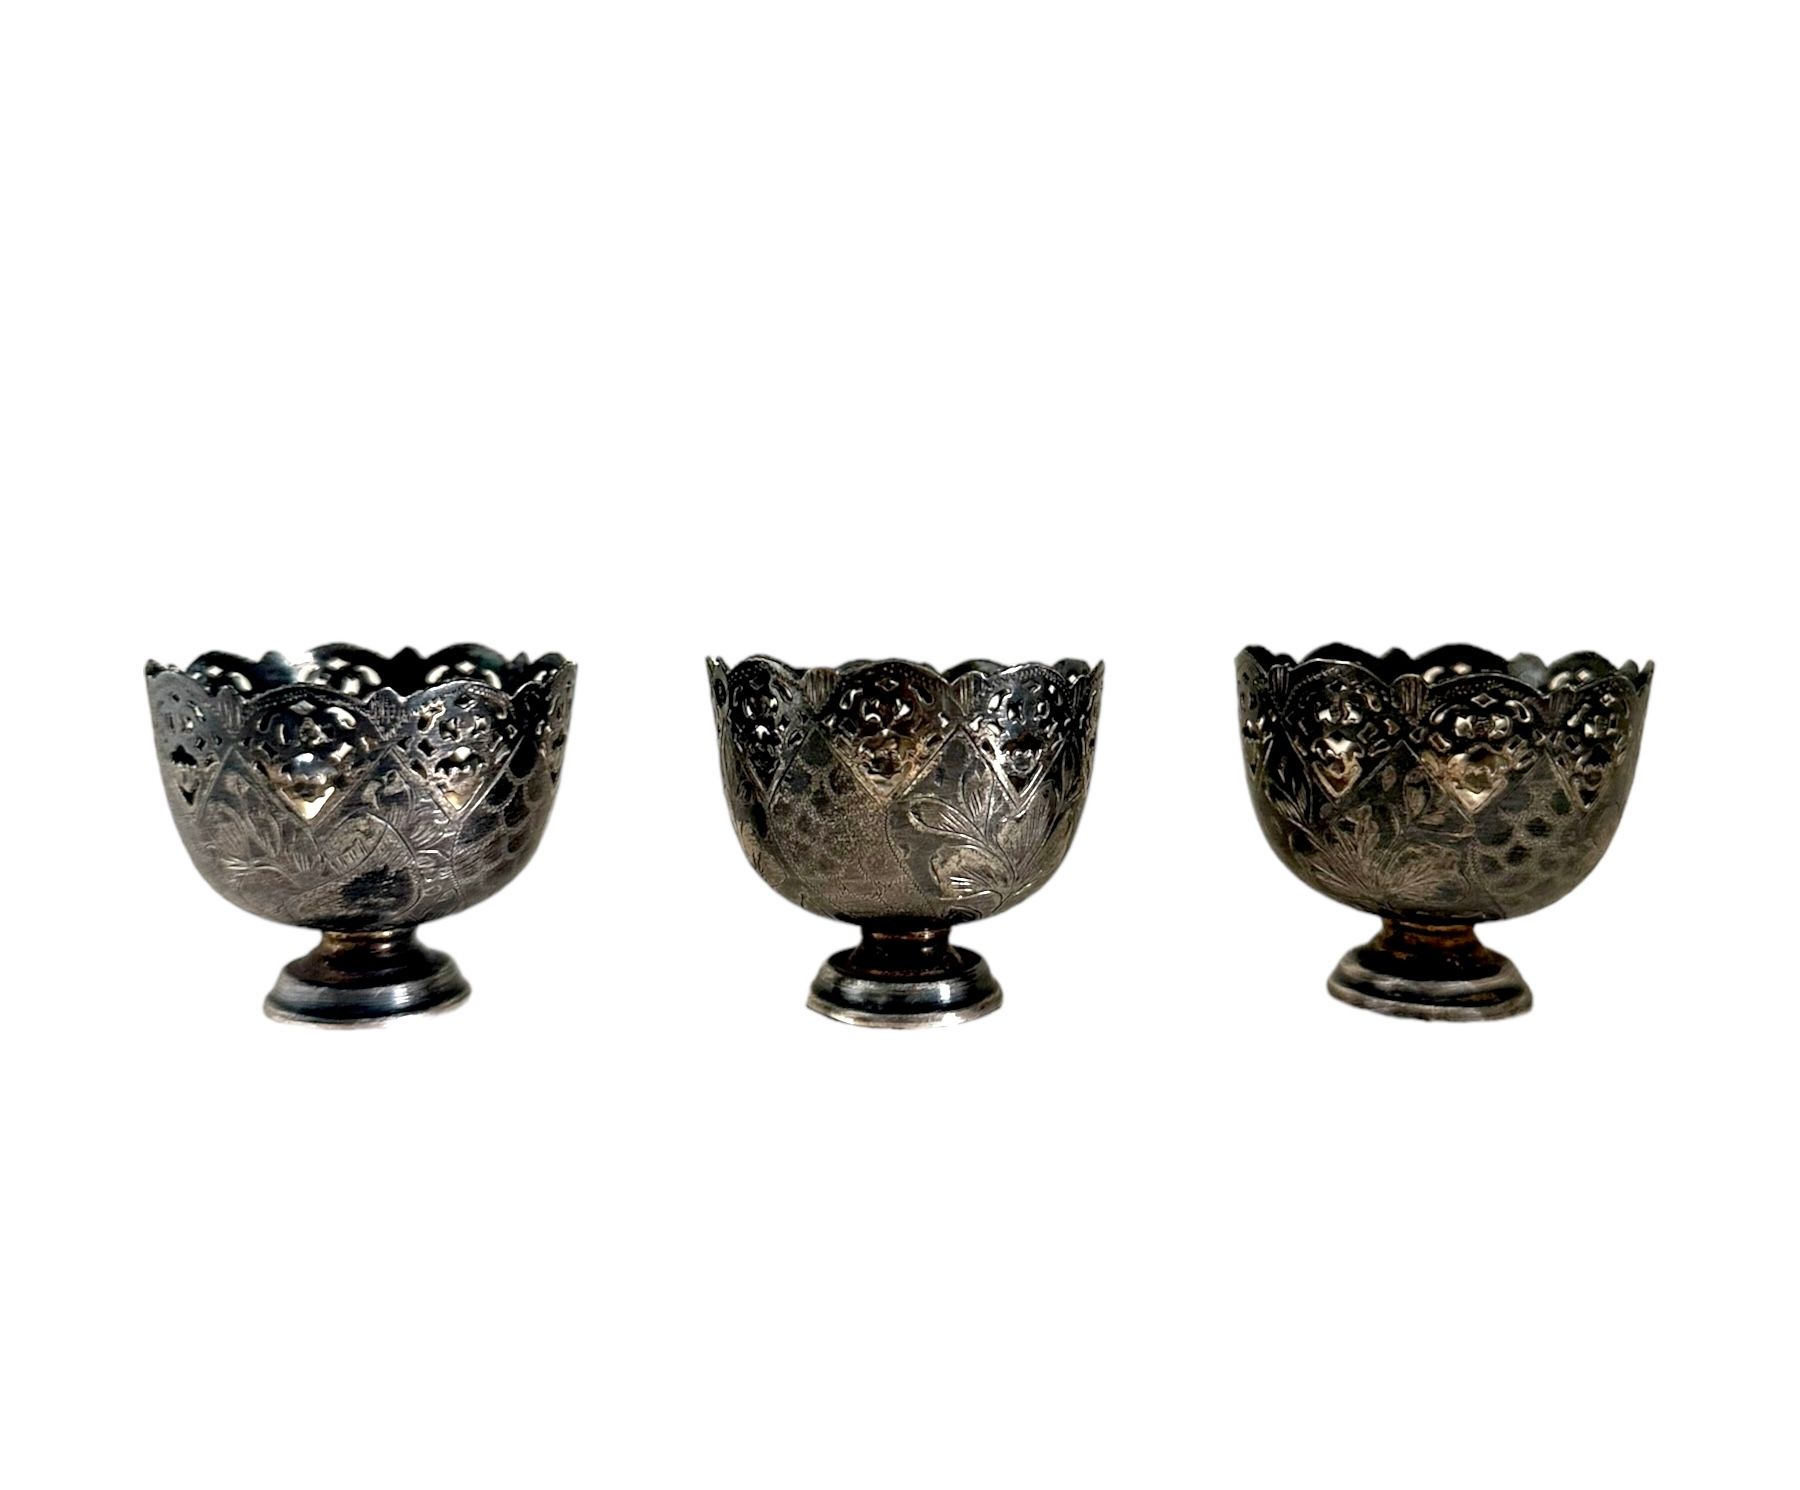 Three Ottoman Tugra Silver Zarf Cups Tres tazas de café de plata, zarf con borde&hellip;